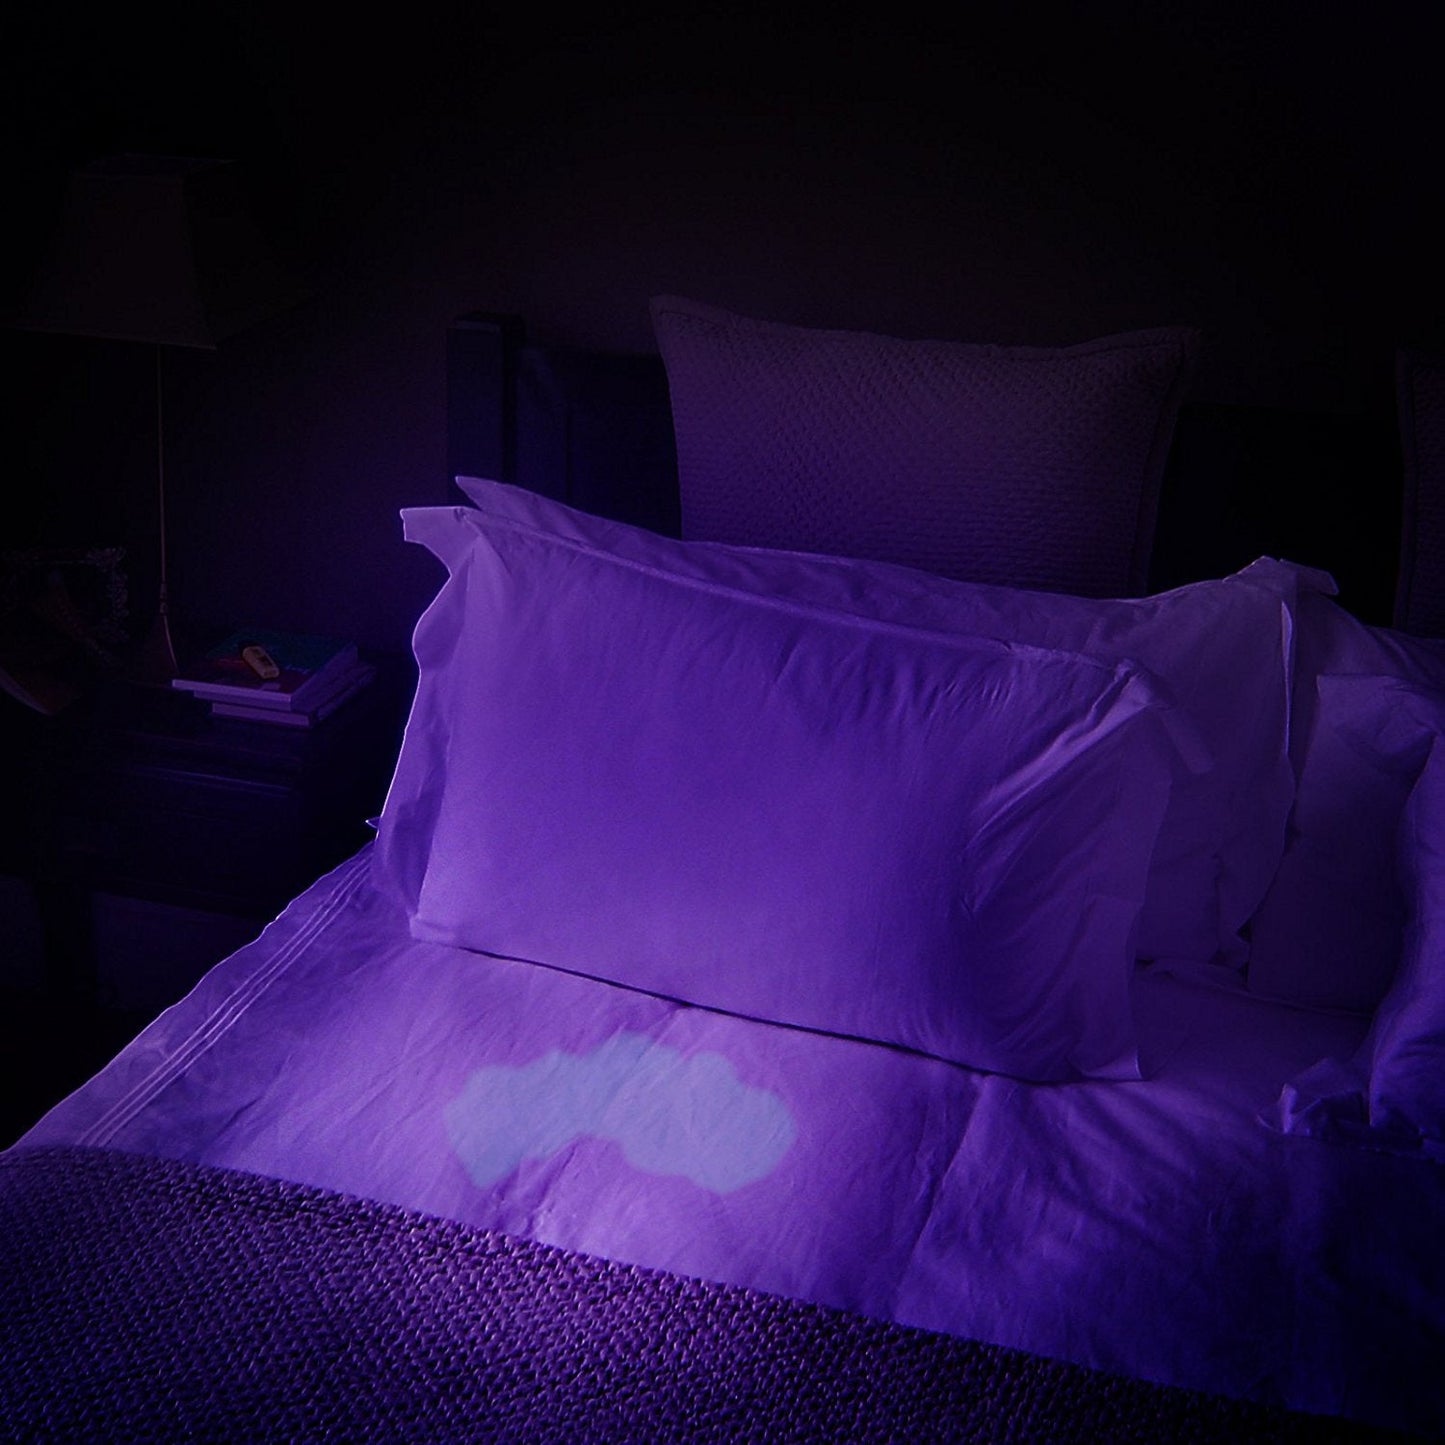 100 LED UV Ultra-Bright Blacklight Flashlight 18W 385-395nm - Silver